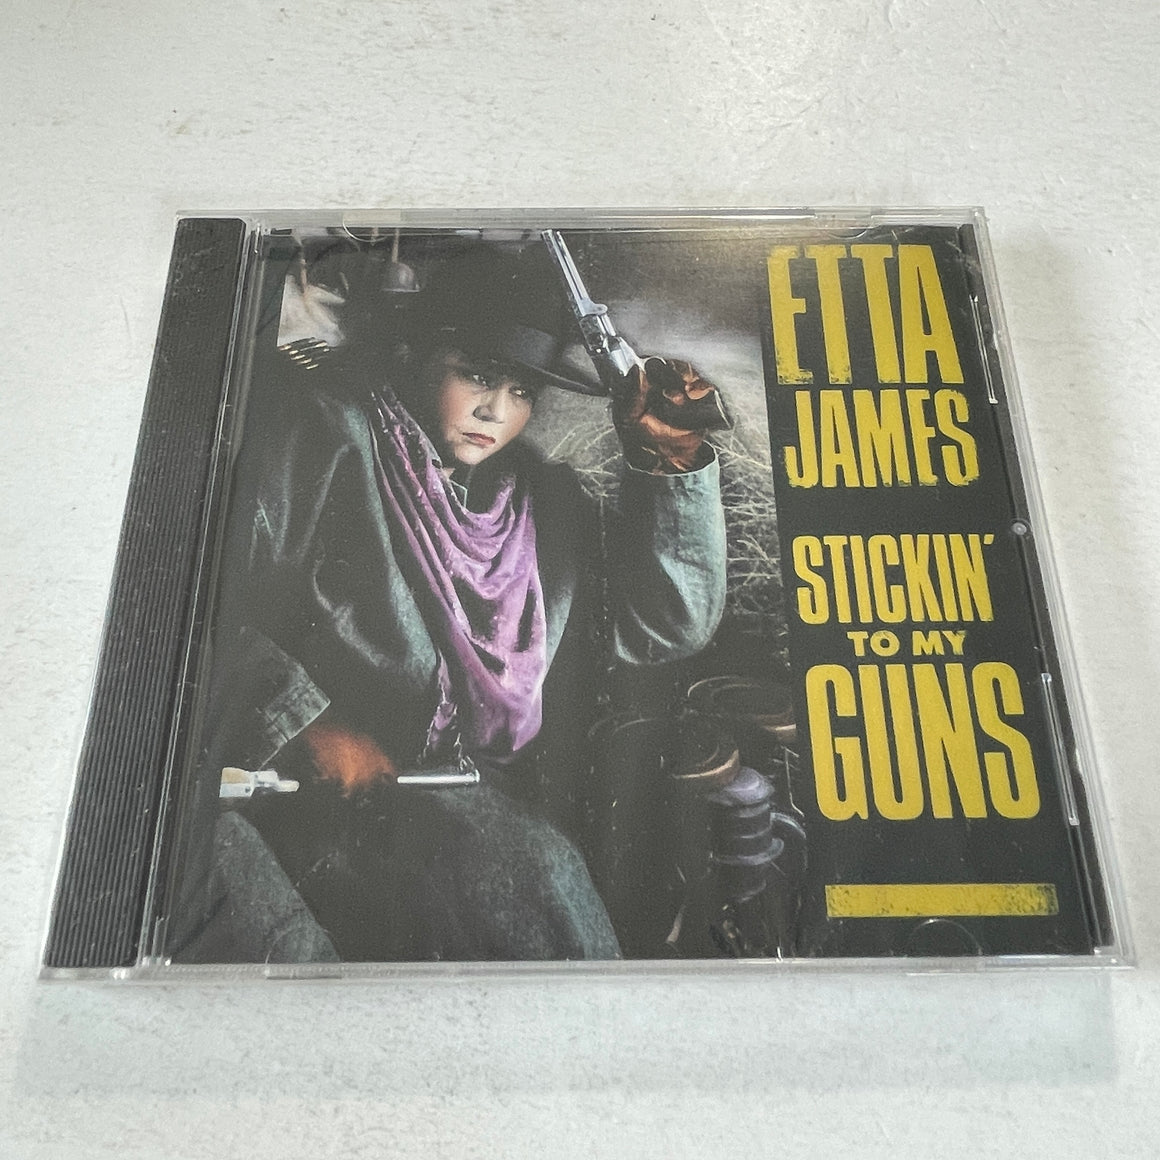 Etta James Stickin' To My Guns New Sealed CD M\M